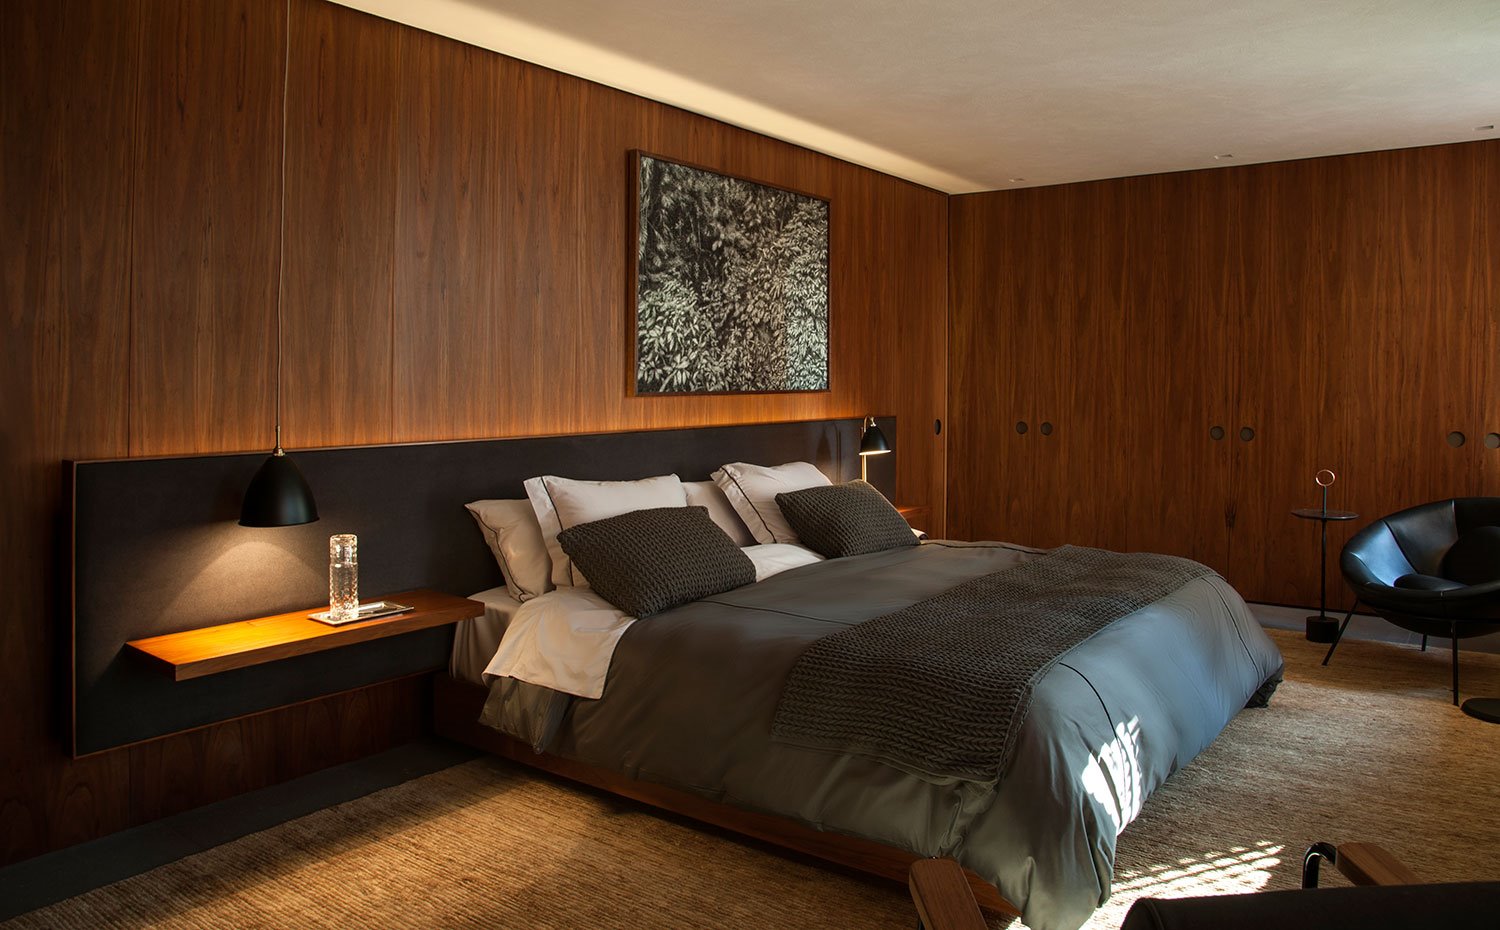 Dormitorio principal, paredes revestidas de madera, cabezal en gris con balda a modo de mesilla